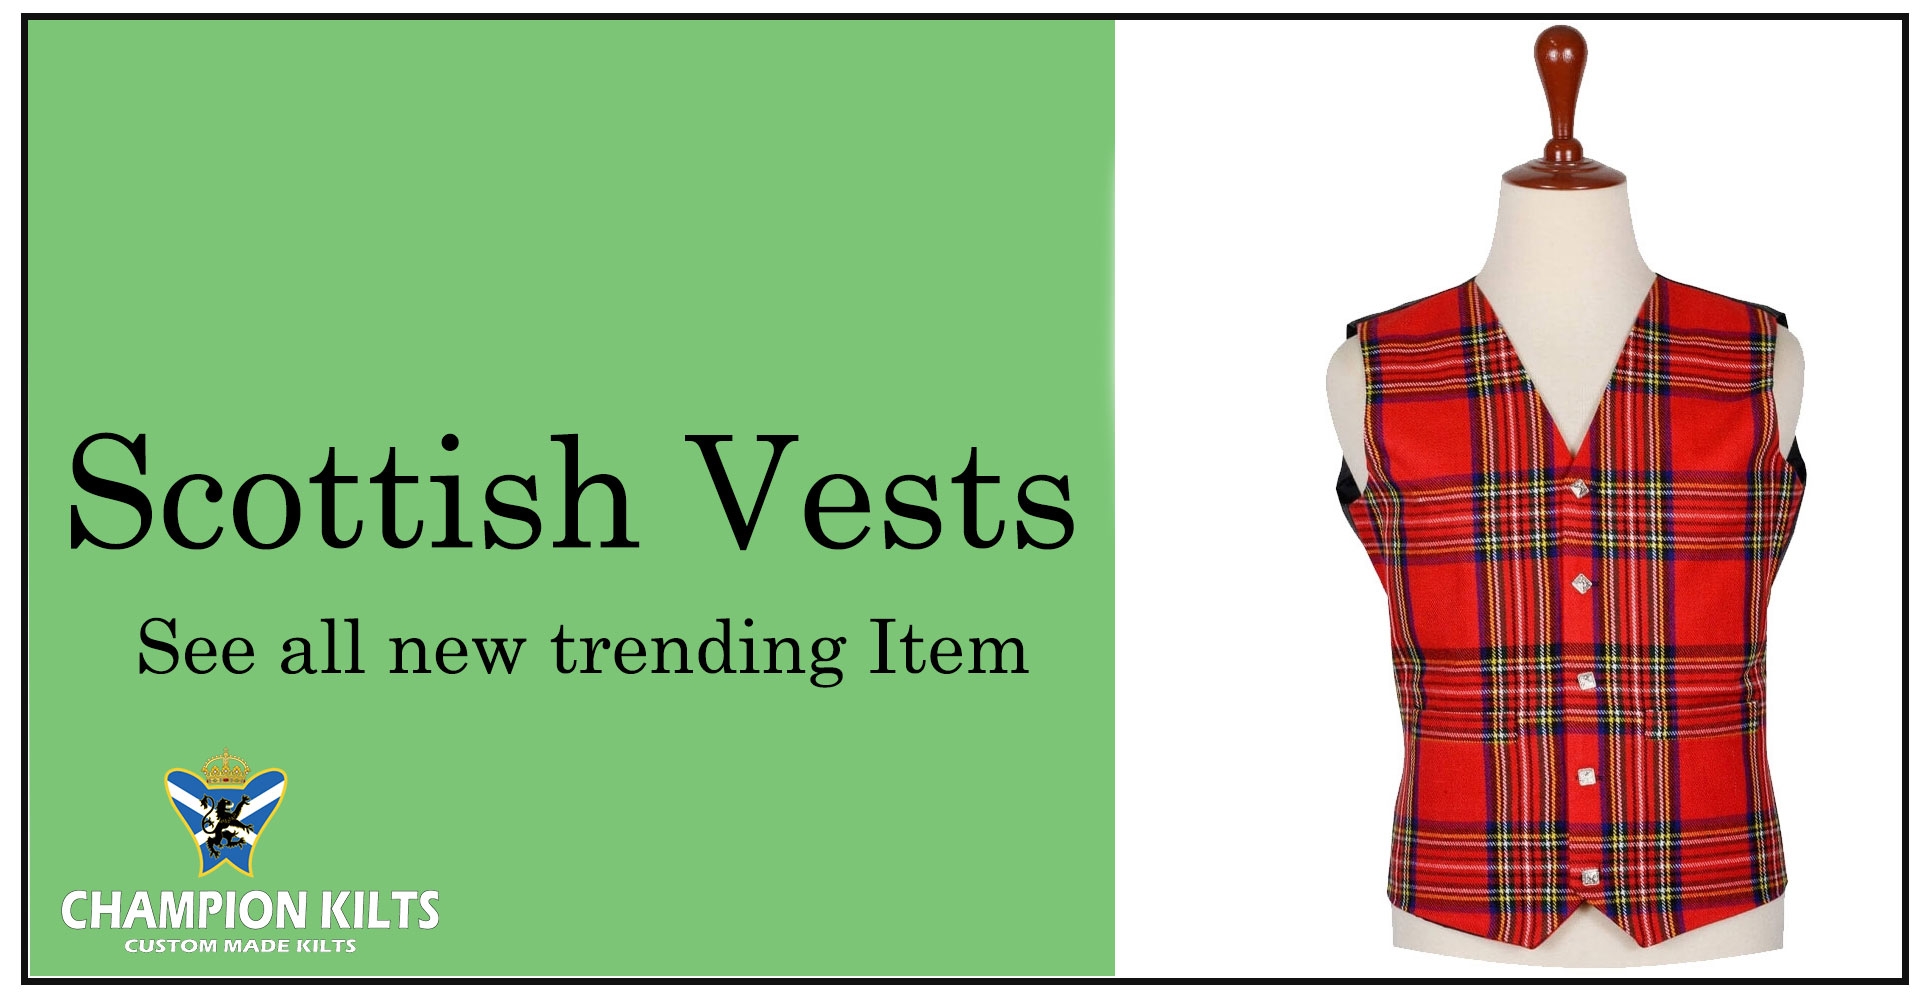 Scottish Vests